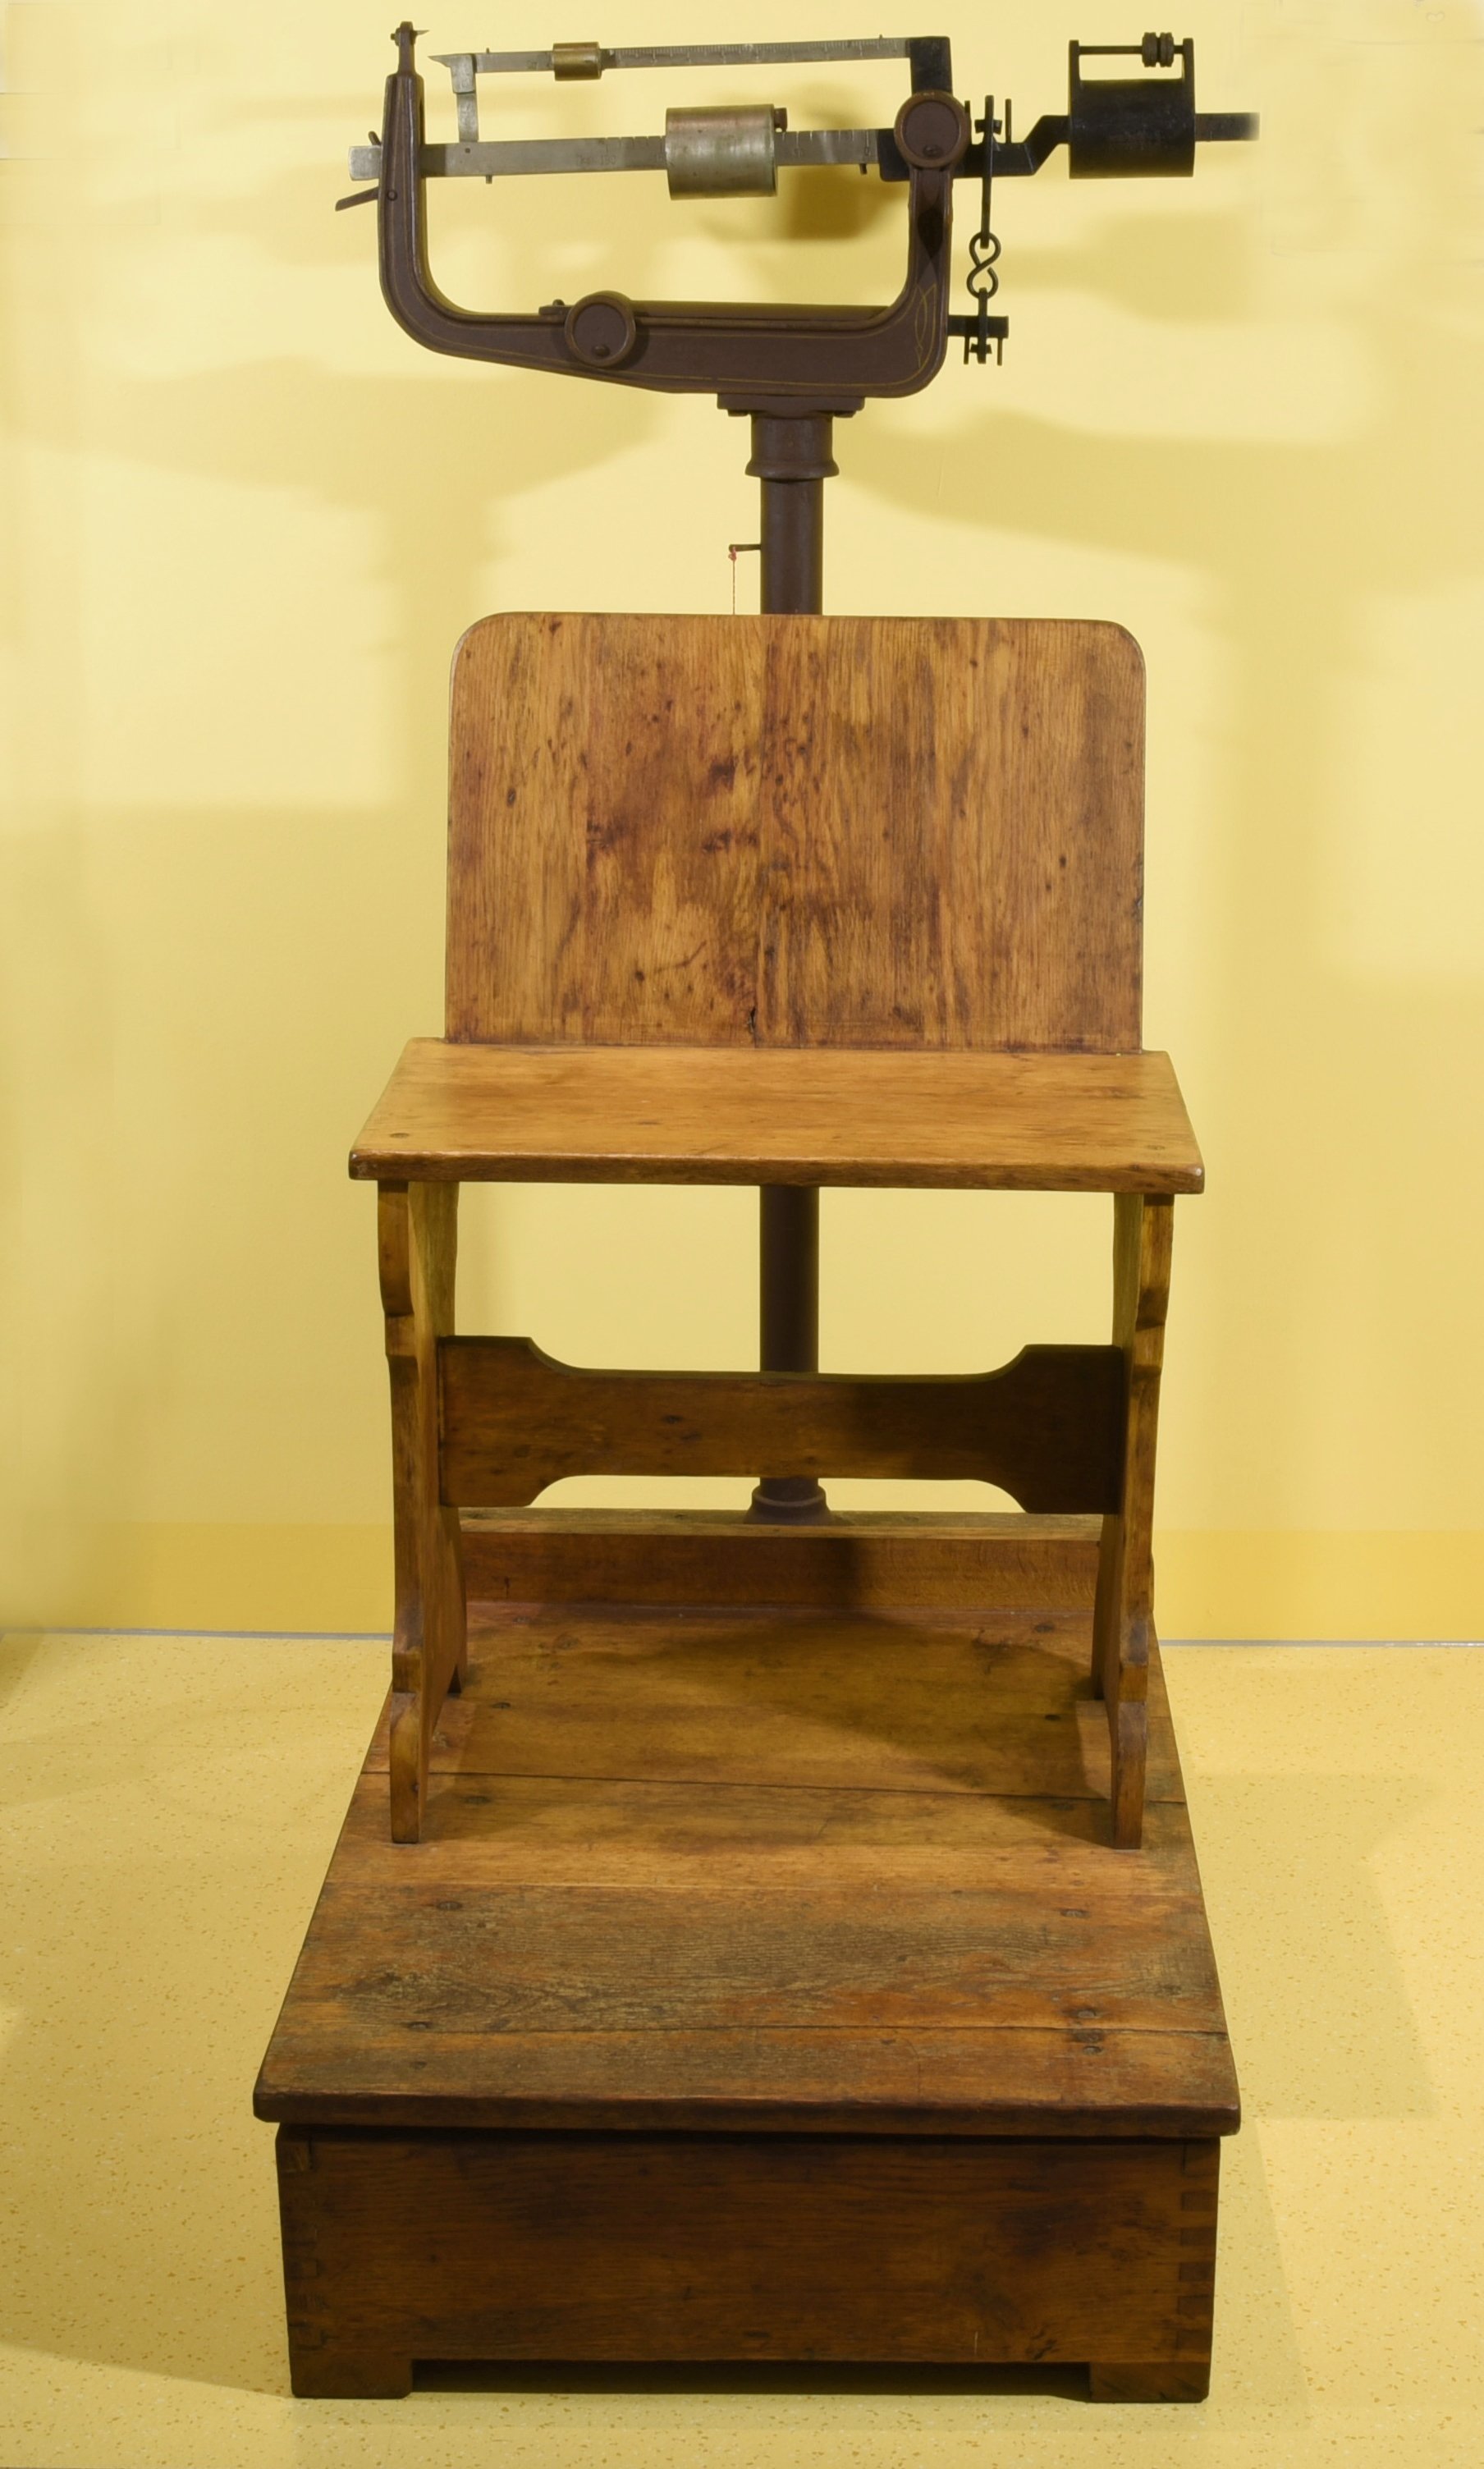 Personen-Stuhl-Waage, SECA, HL 200 kg (Stadt- und Waagenmuseum Oschatz CC BY-NC-SA)